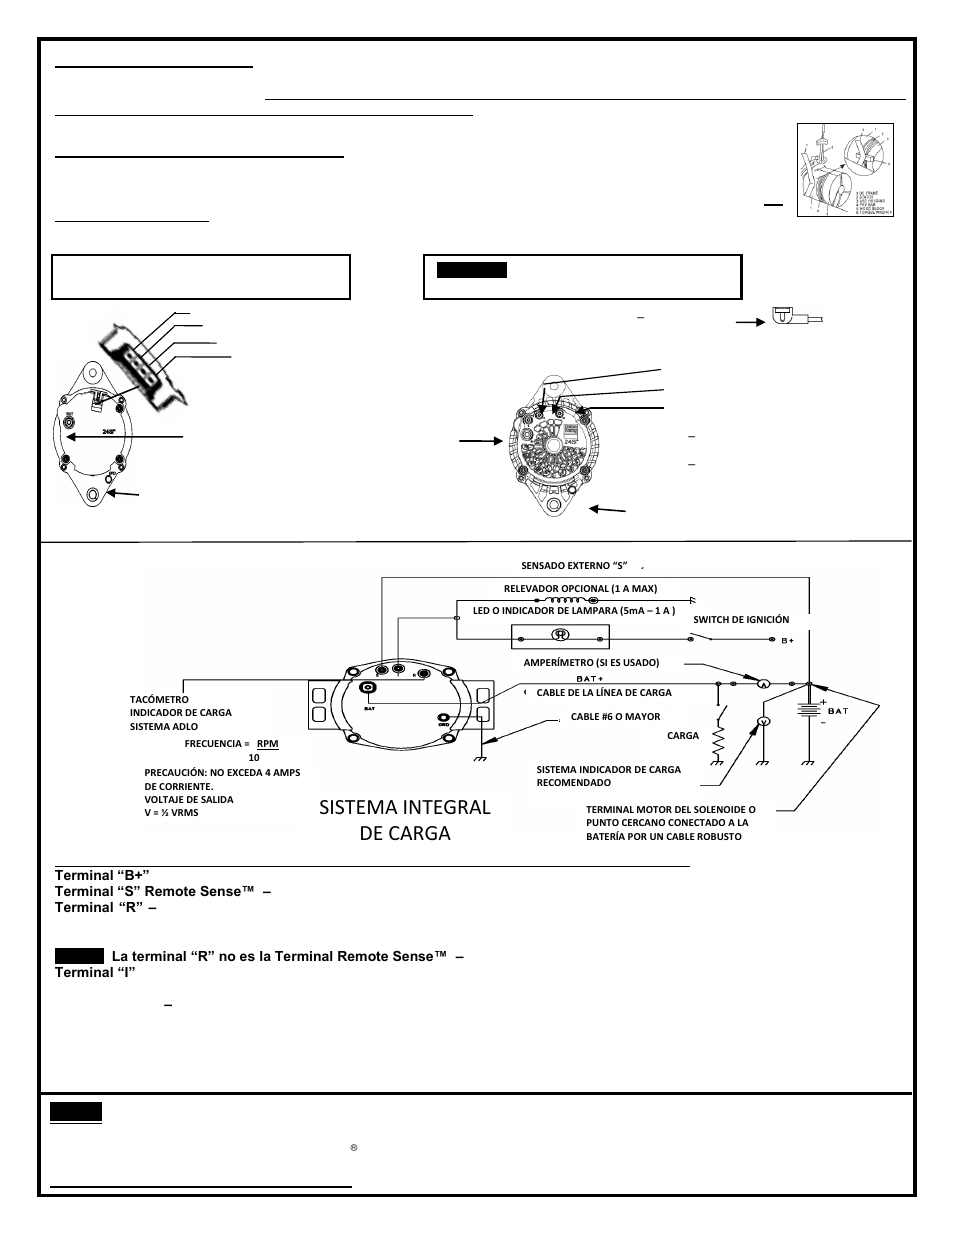 Sistema Integral De Carga Nota Remy 28si Alternator User Manual Page 5 6 Original Mode